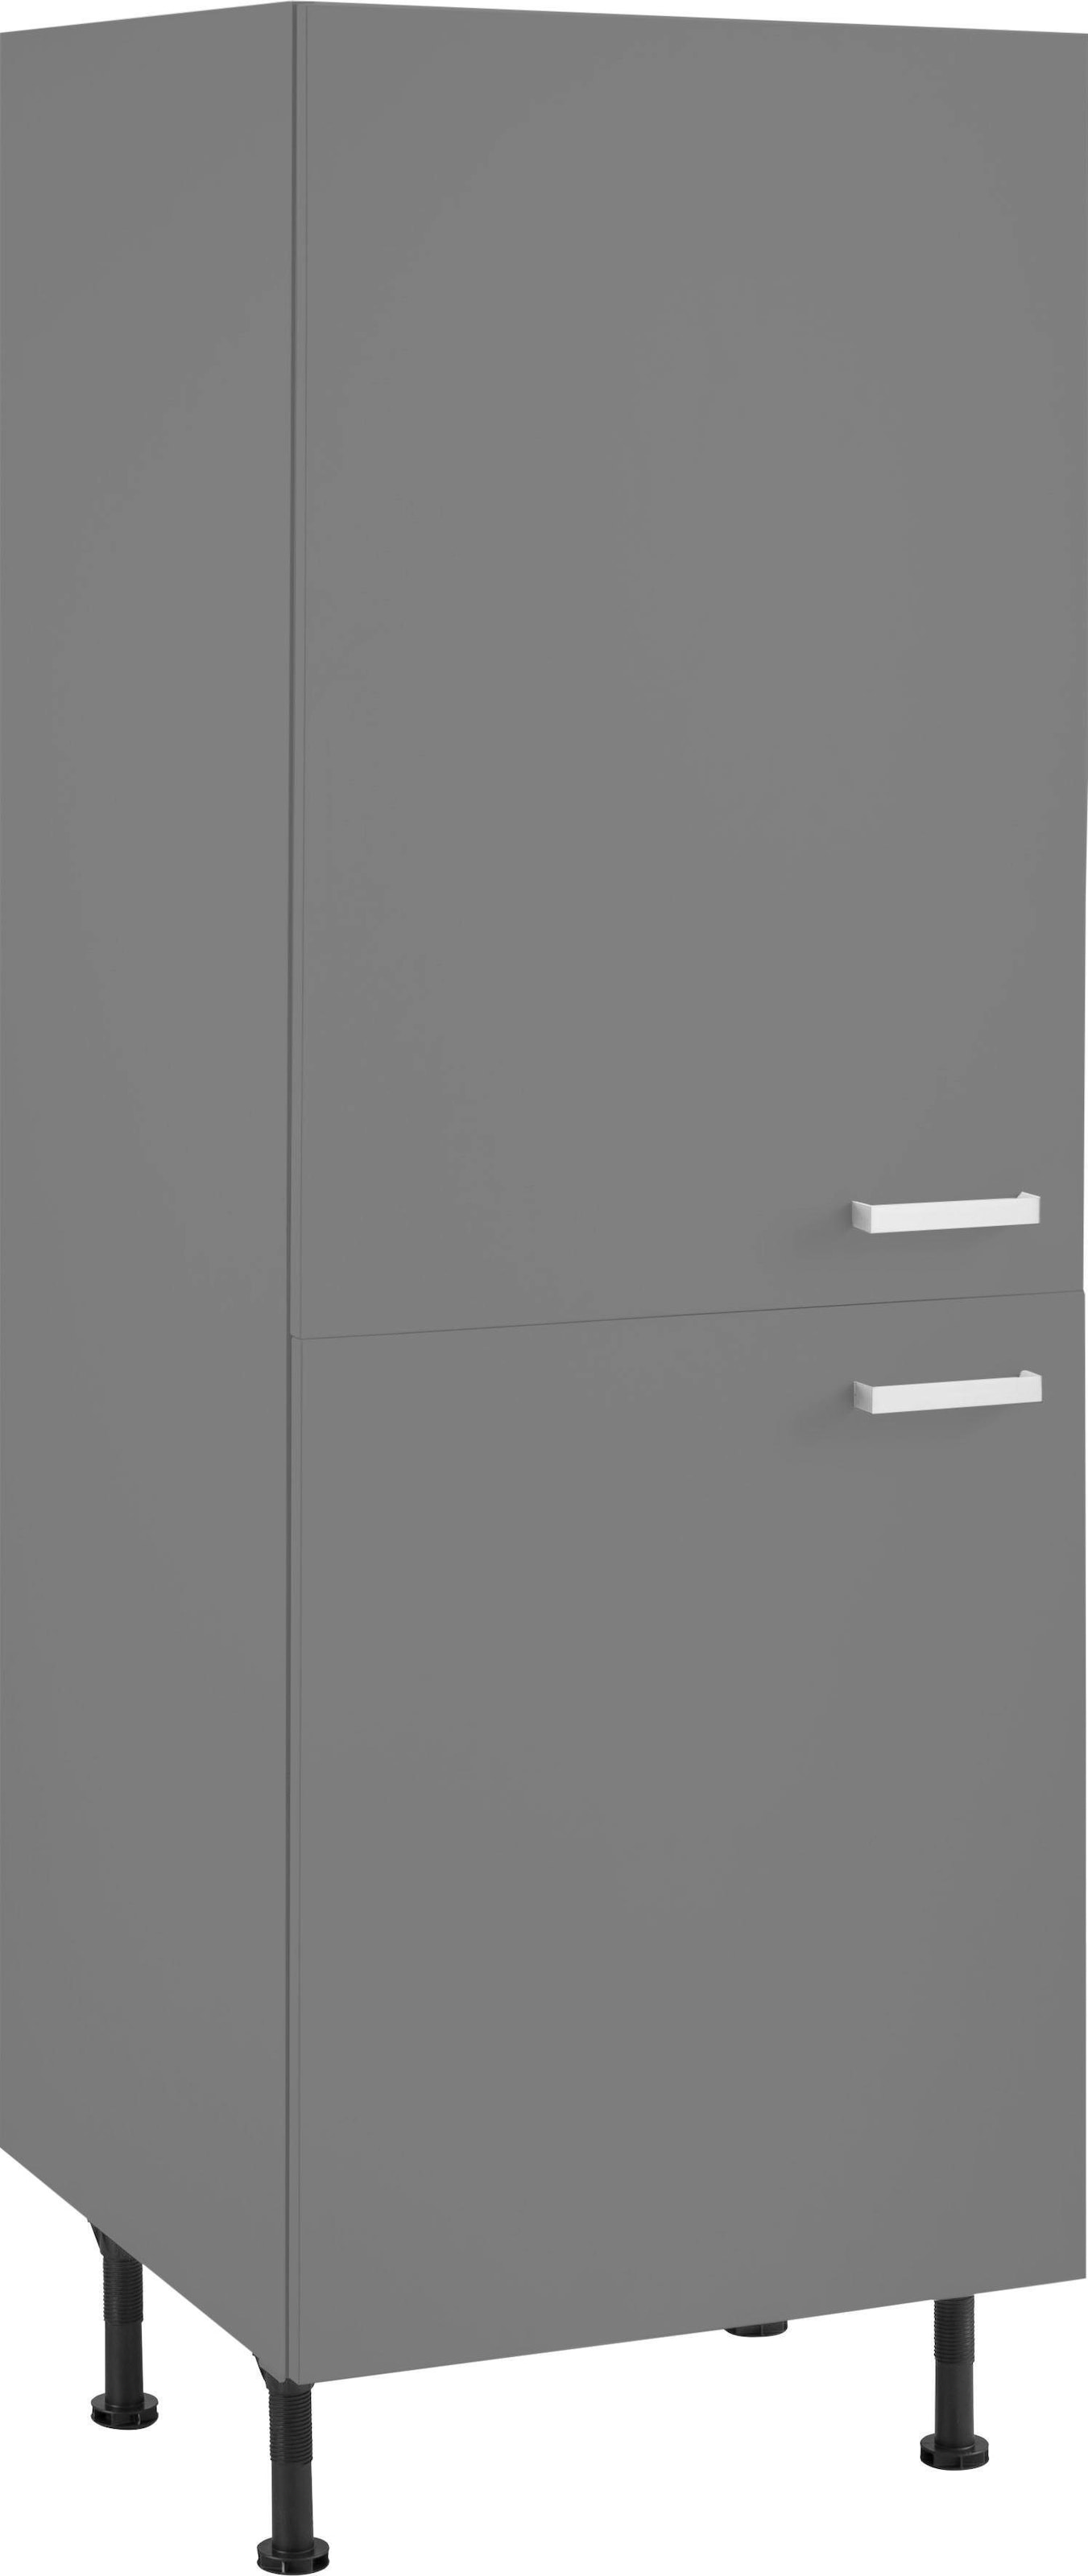 Kühlumbauschrank »Parma«, Breite 60 cm